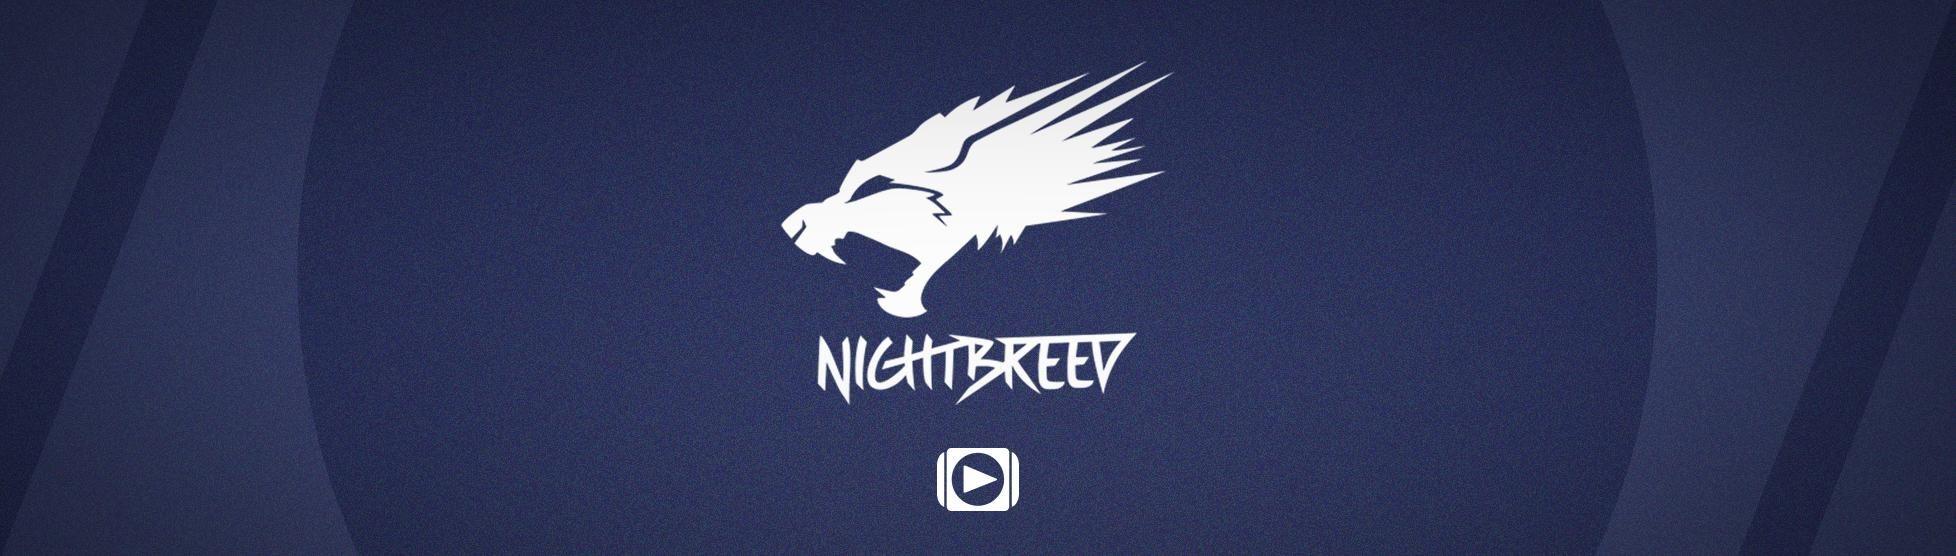 Nightbreed Logo - Nightbreed - Artists - Hardstyle.com: Home of Hardstyle